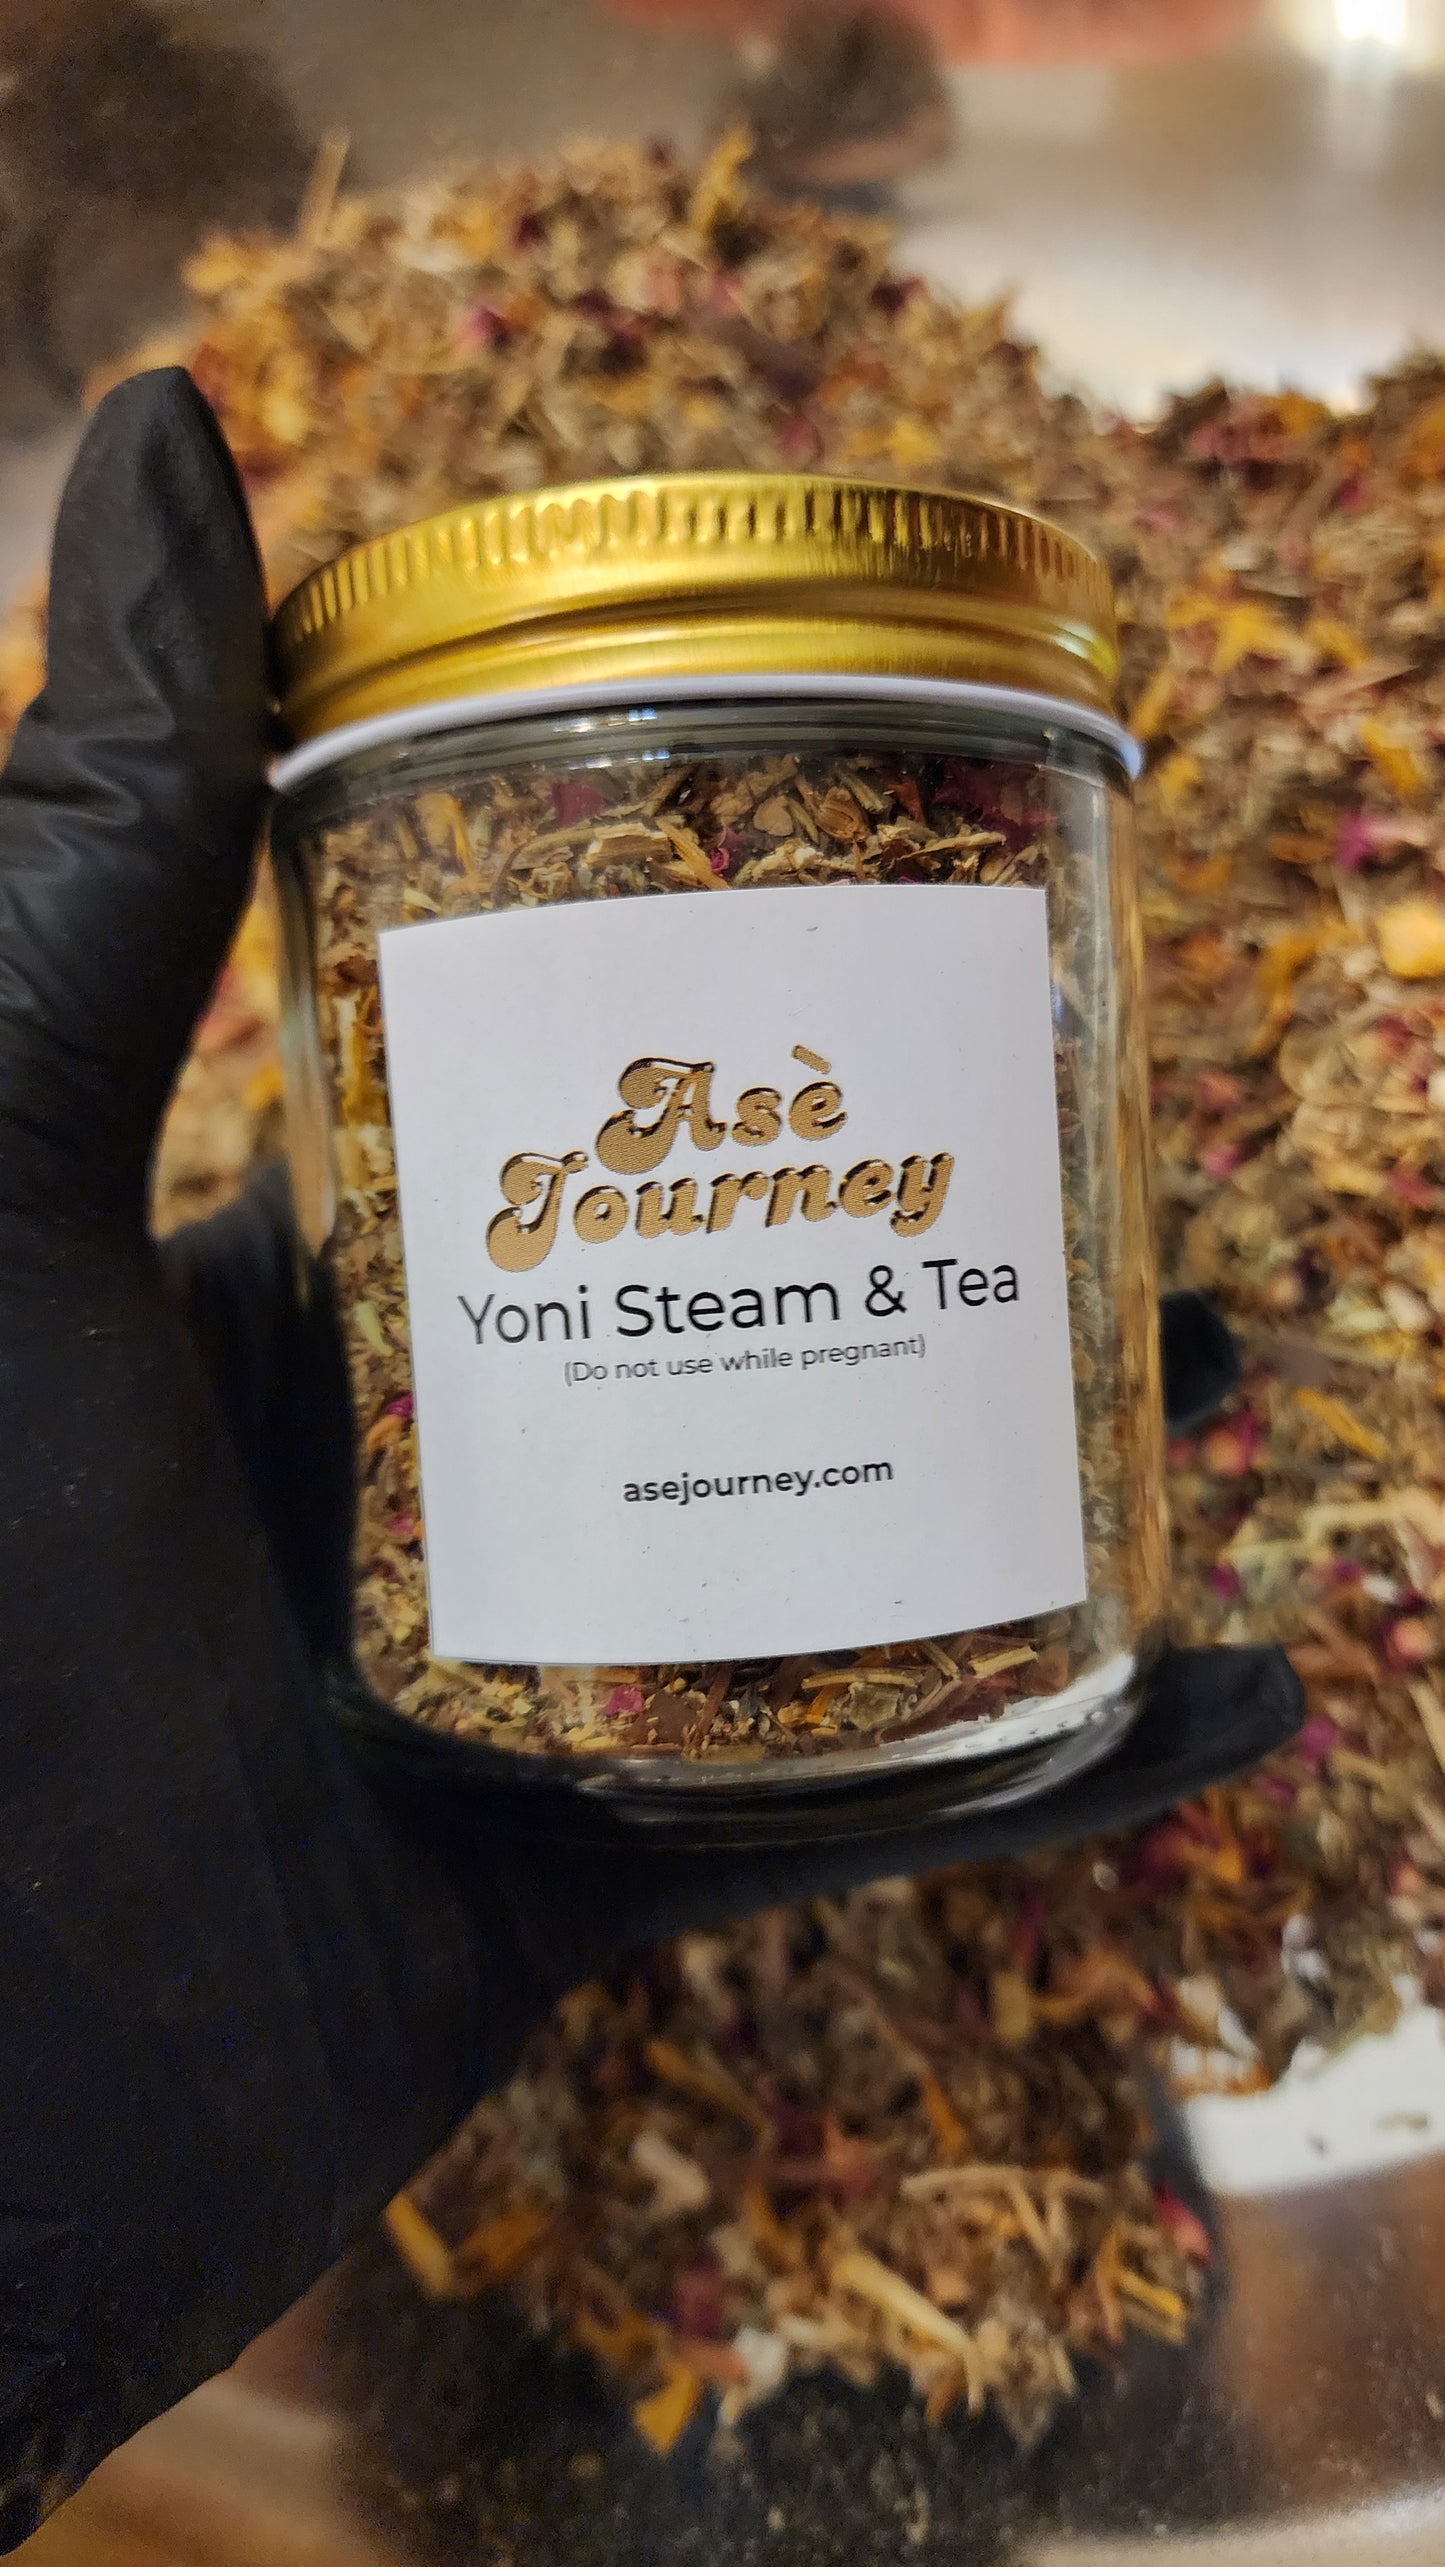 Yoni Steam and Tea